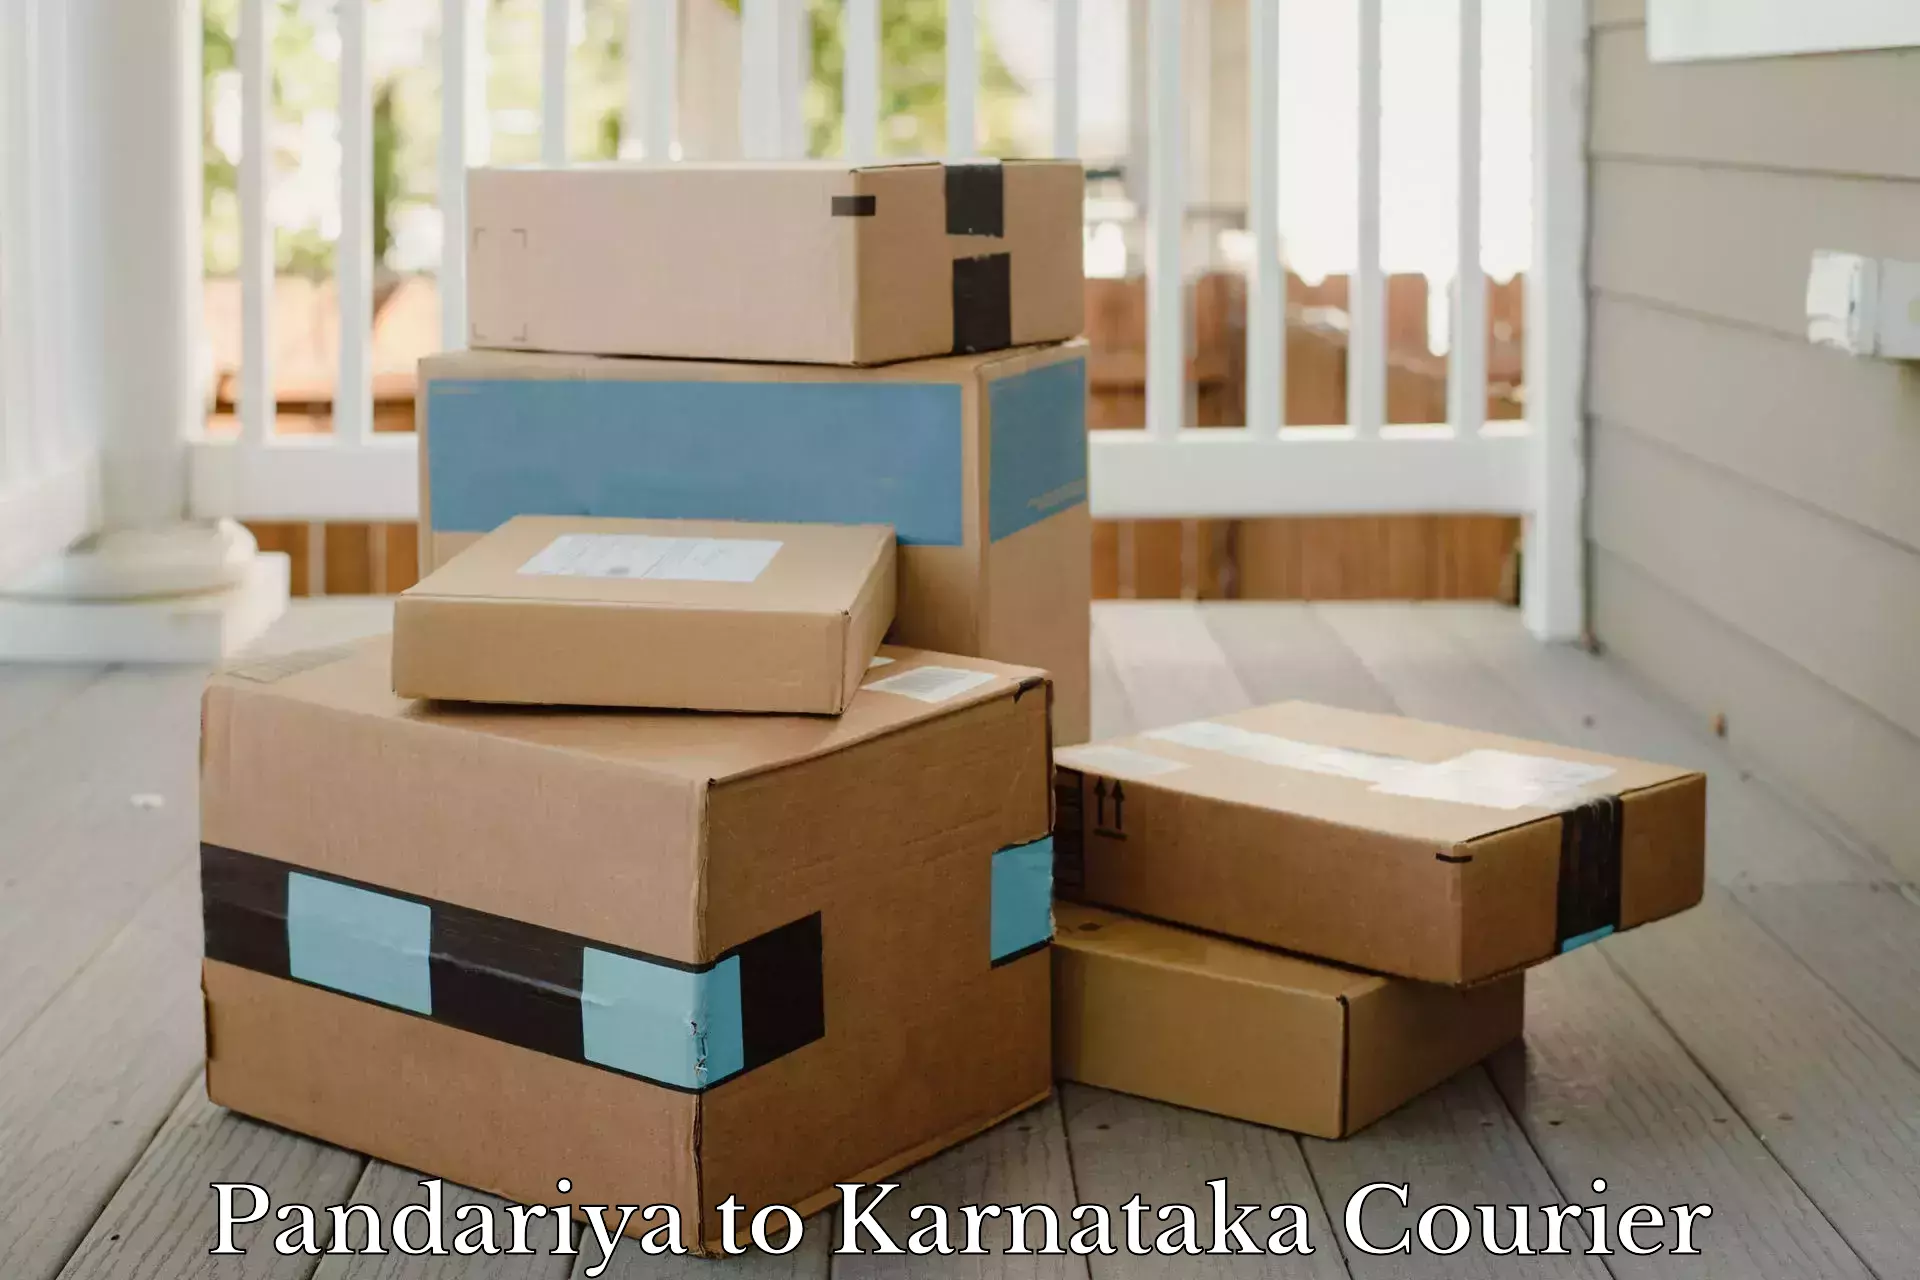 Express logistics providers Pandariya to Karnataka